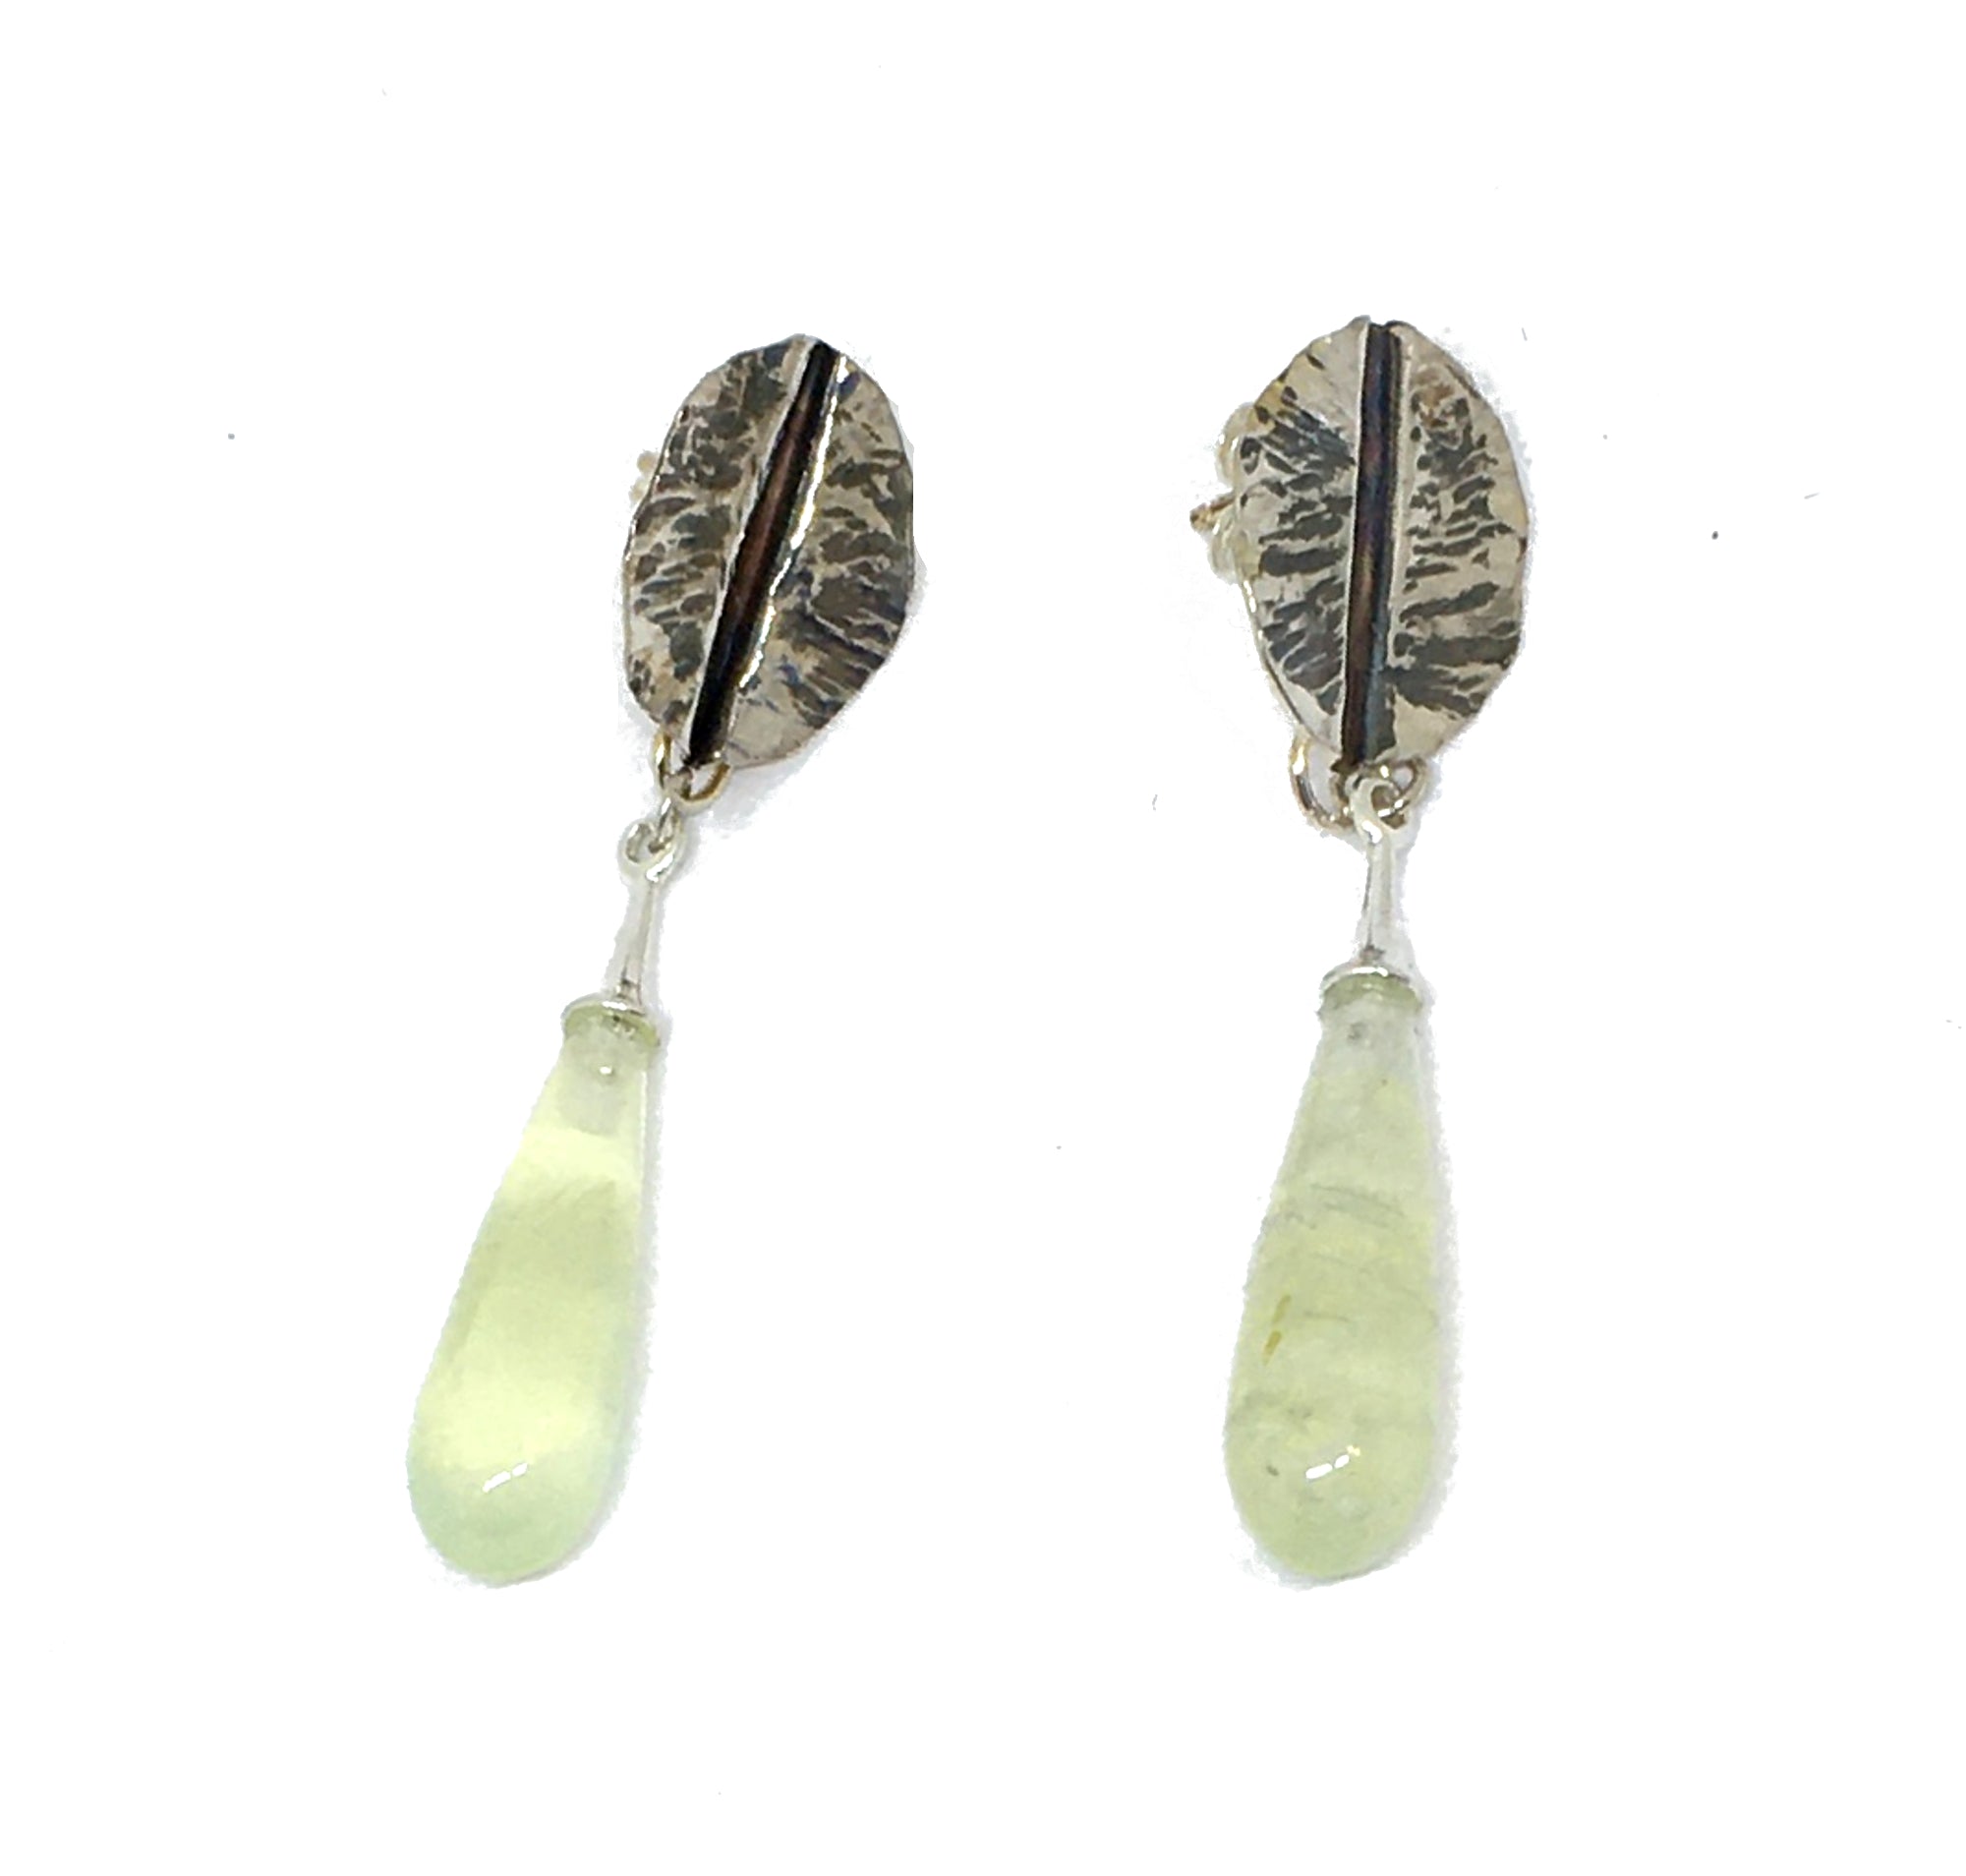 Handforged sterling silver leaf earrings with prehnite gemstone drops